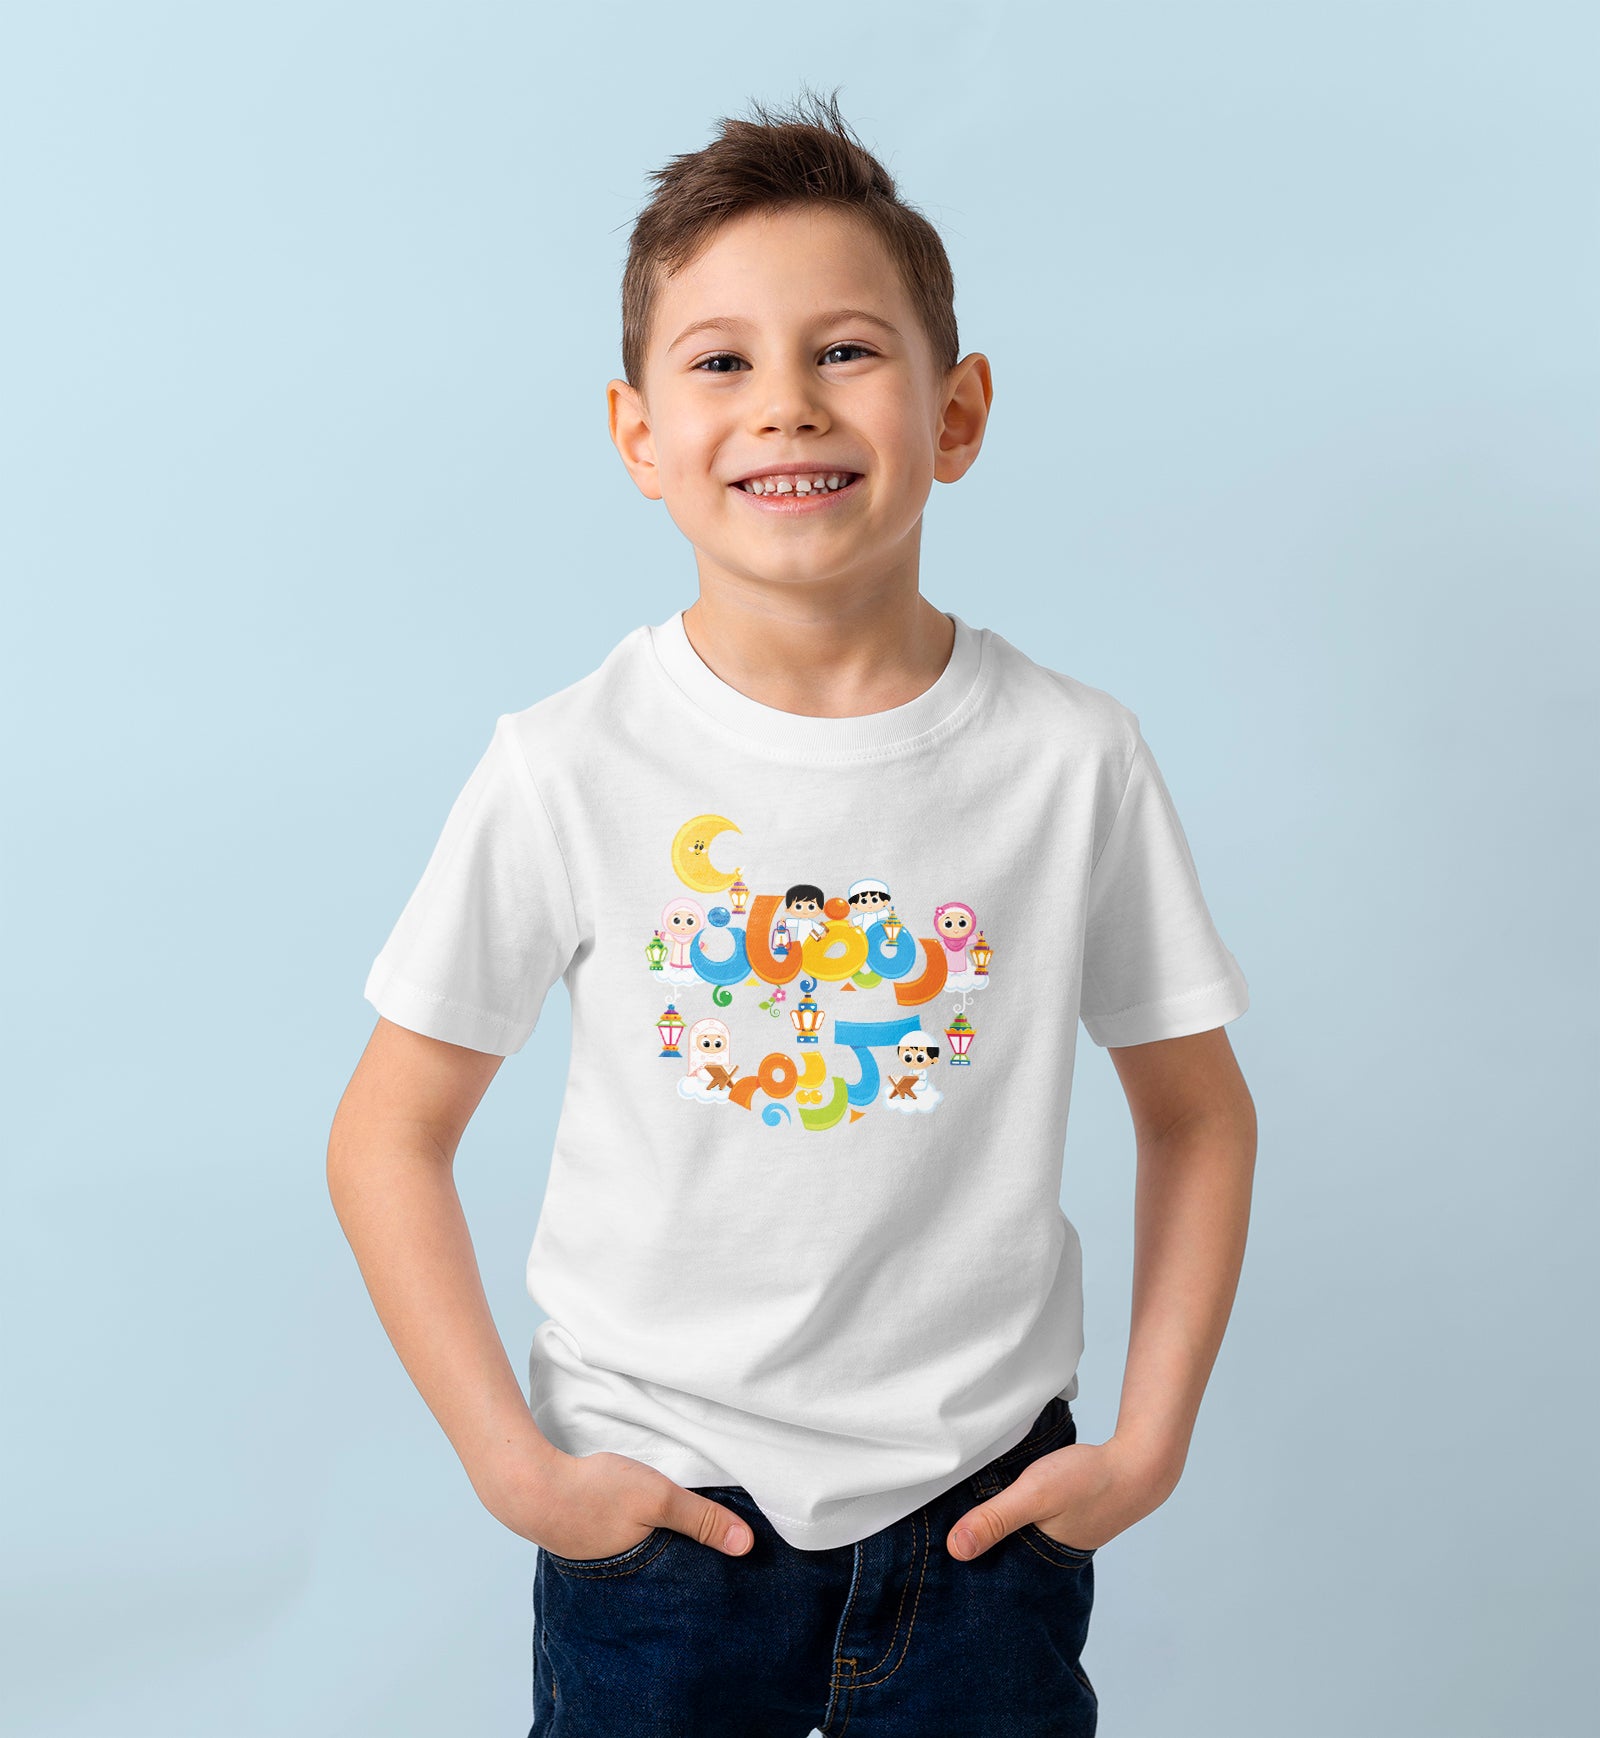 T-shirt for Kids (Ramadan Kareem)